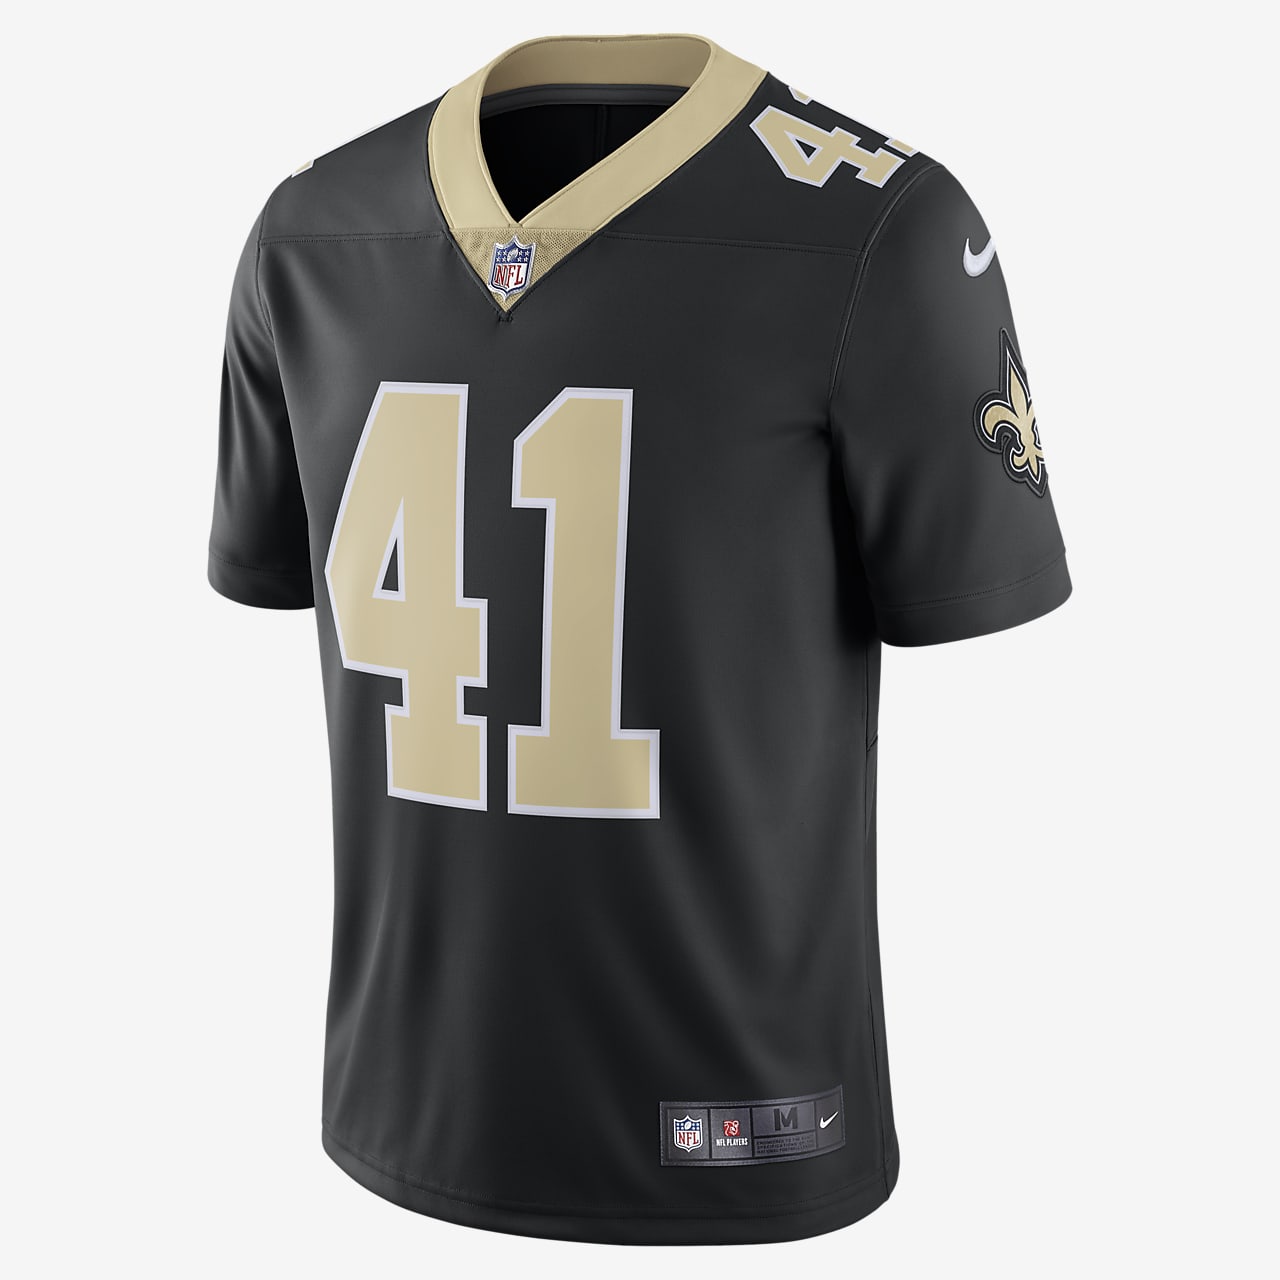 No se mueve jerarquía Salto Camiseta de fútbol americano para hombre NFL New Orleans Saints Limited.  Nike.com